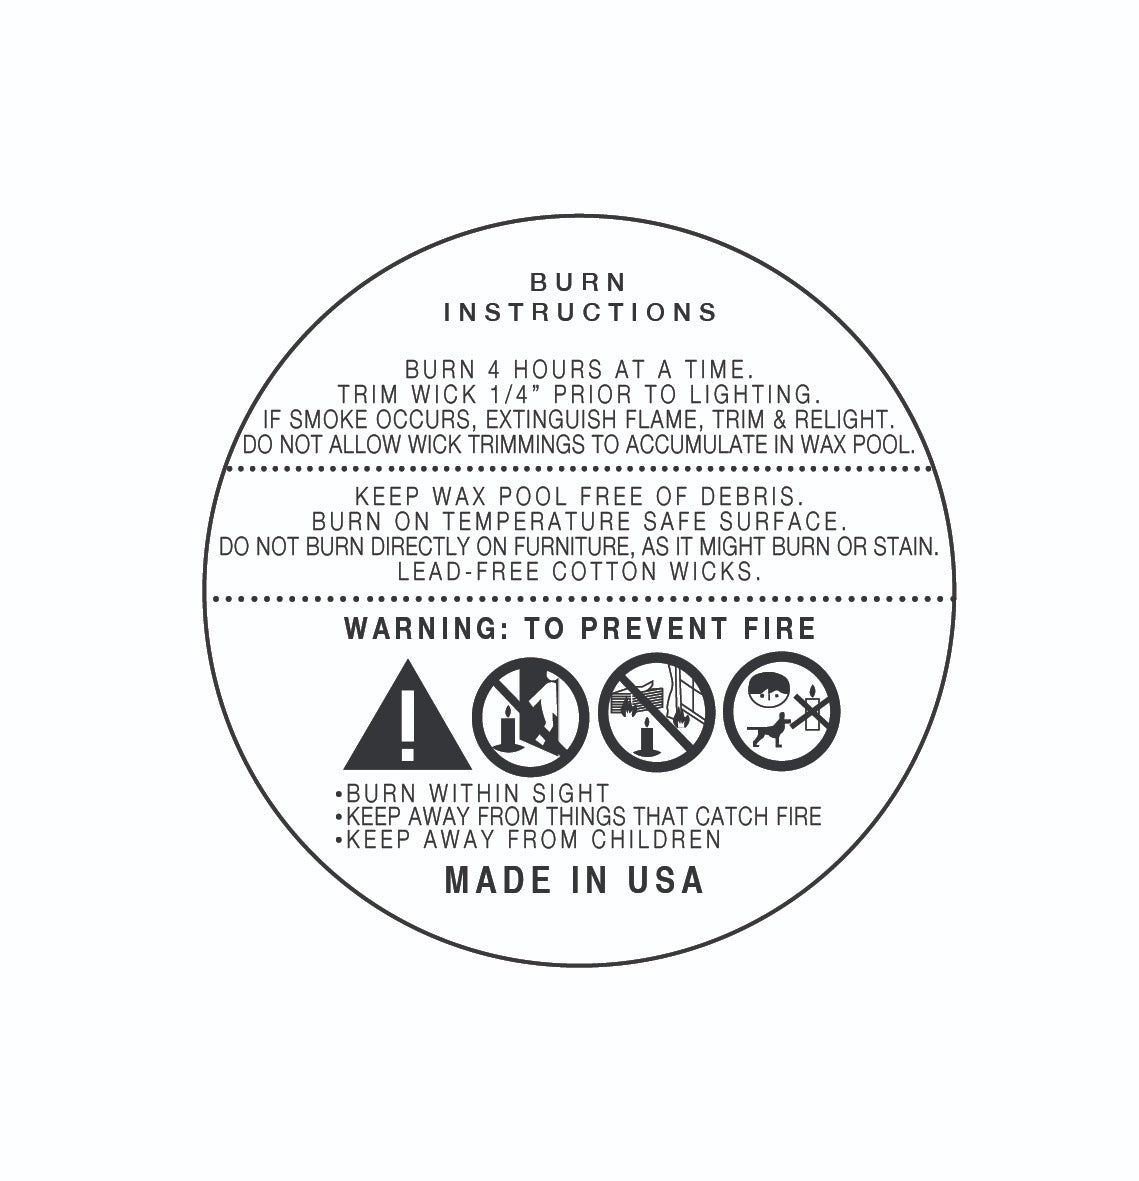 DIGITAL DOWNLOAD Warning Label Template Wax Melt Warning Label